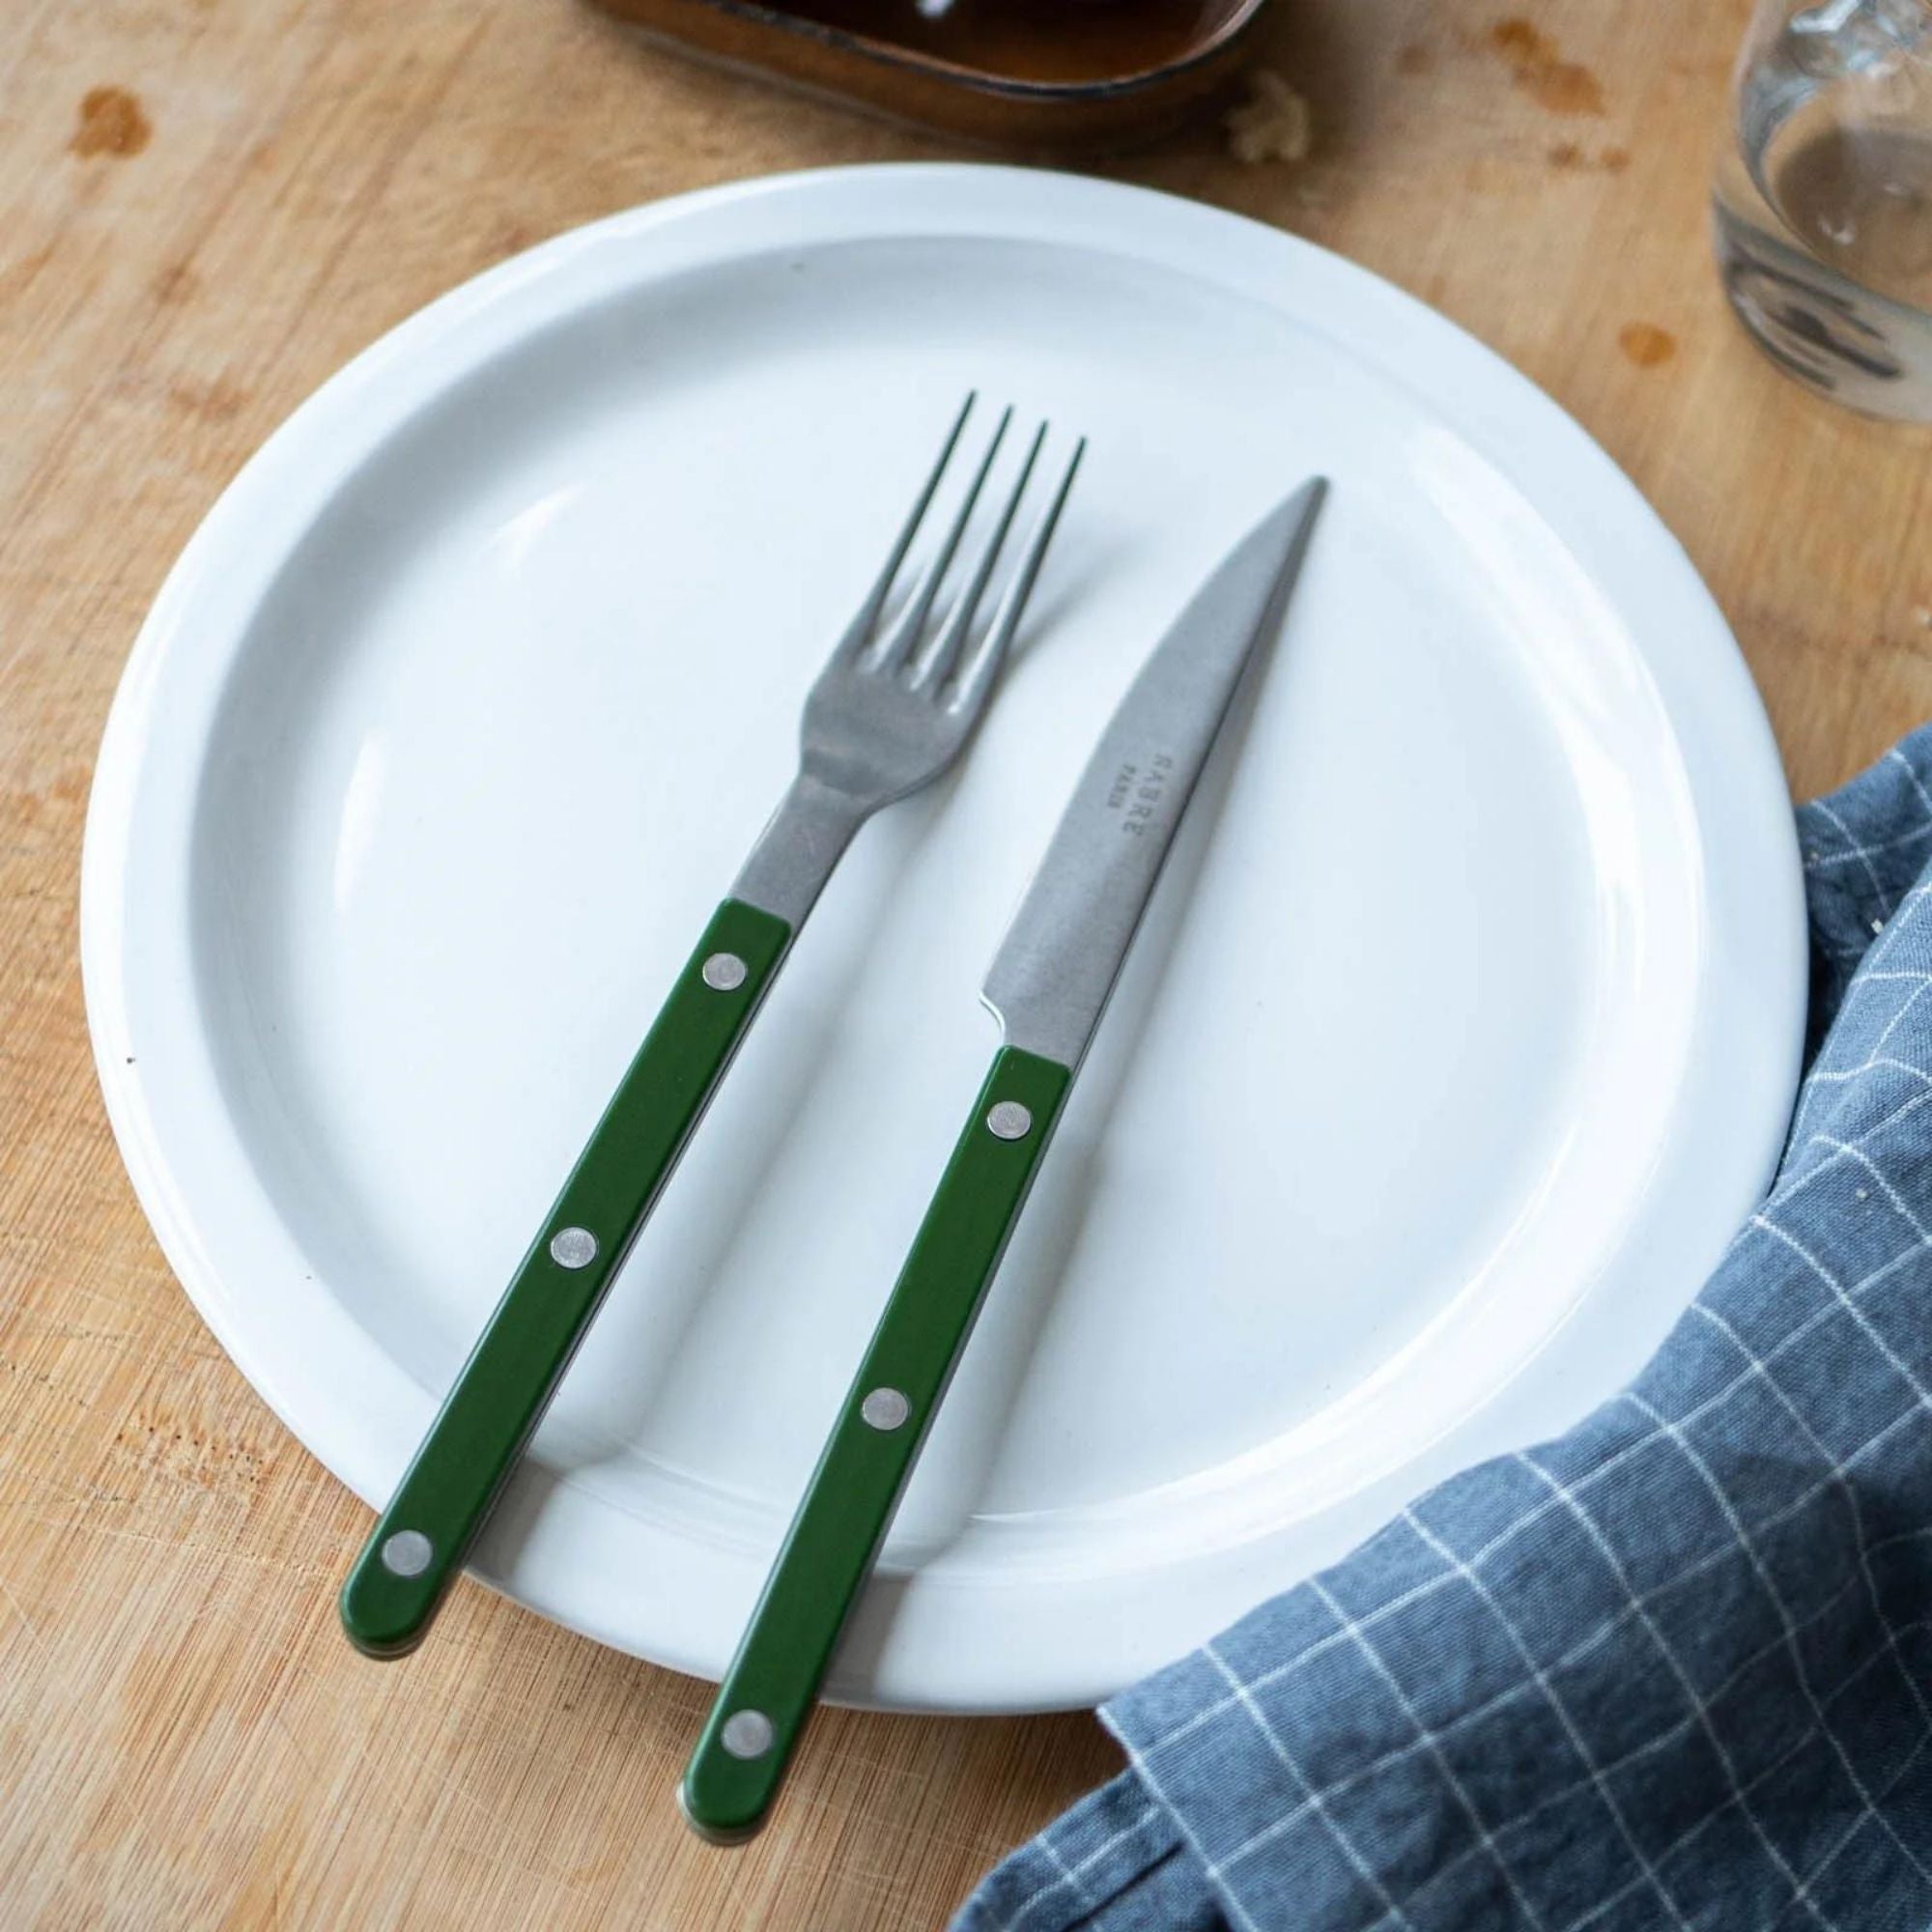 Bistrot Cutlery Set